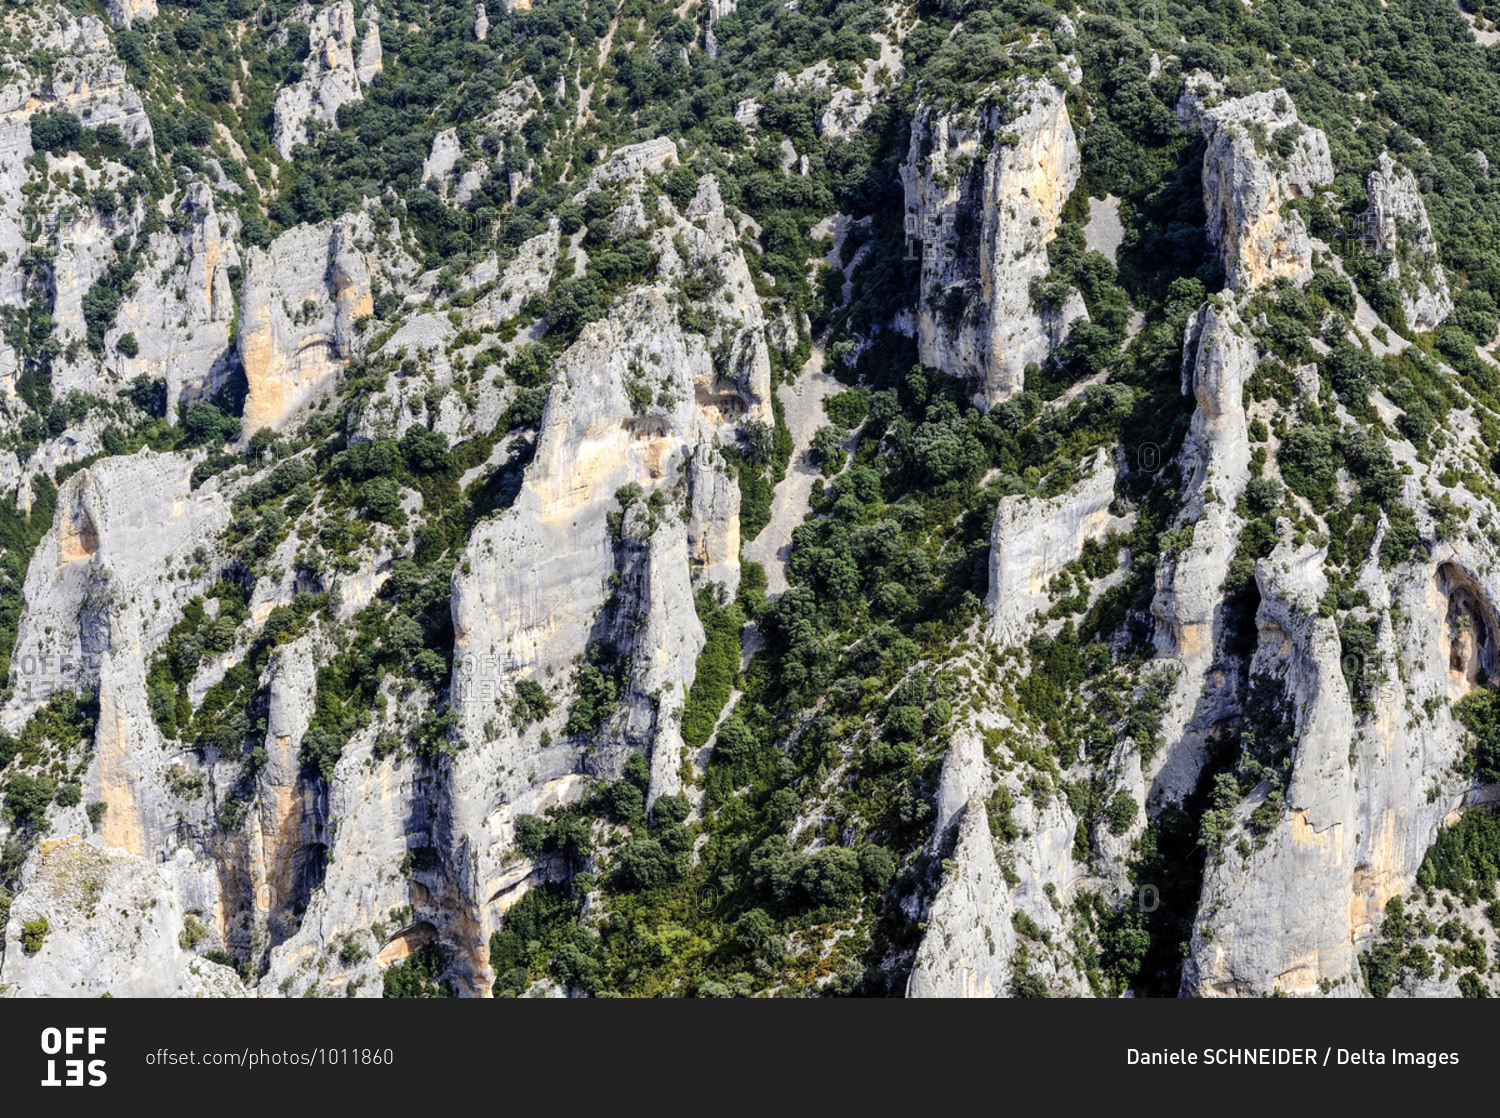 Spain, province of Huesca, autonomous community of Aragon, Sierra y Canons de Guara natural park, the Mascun canyon